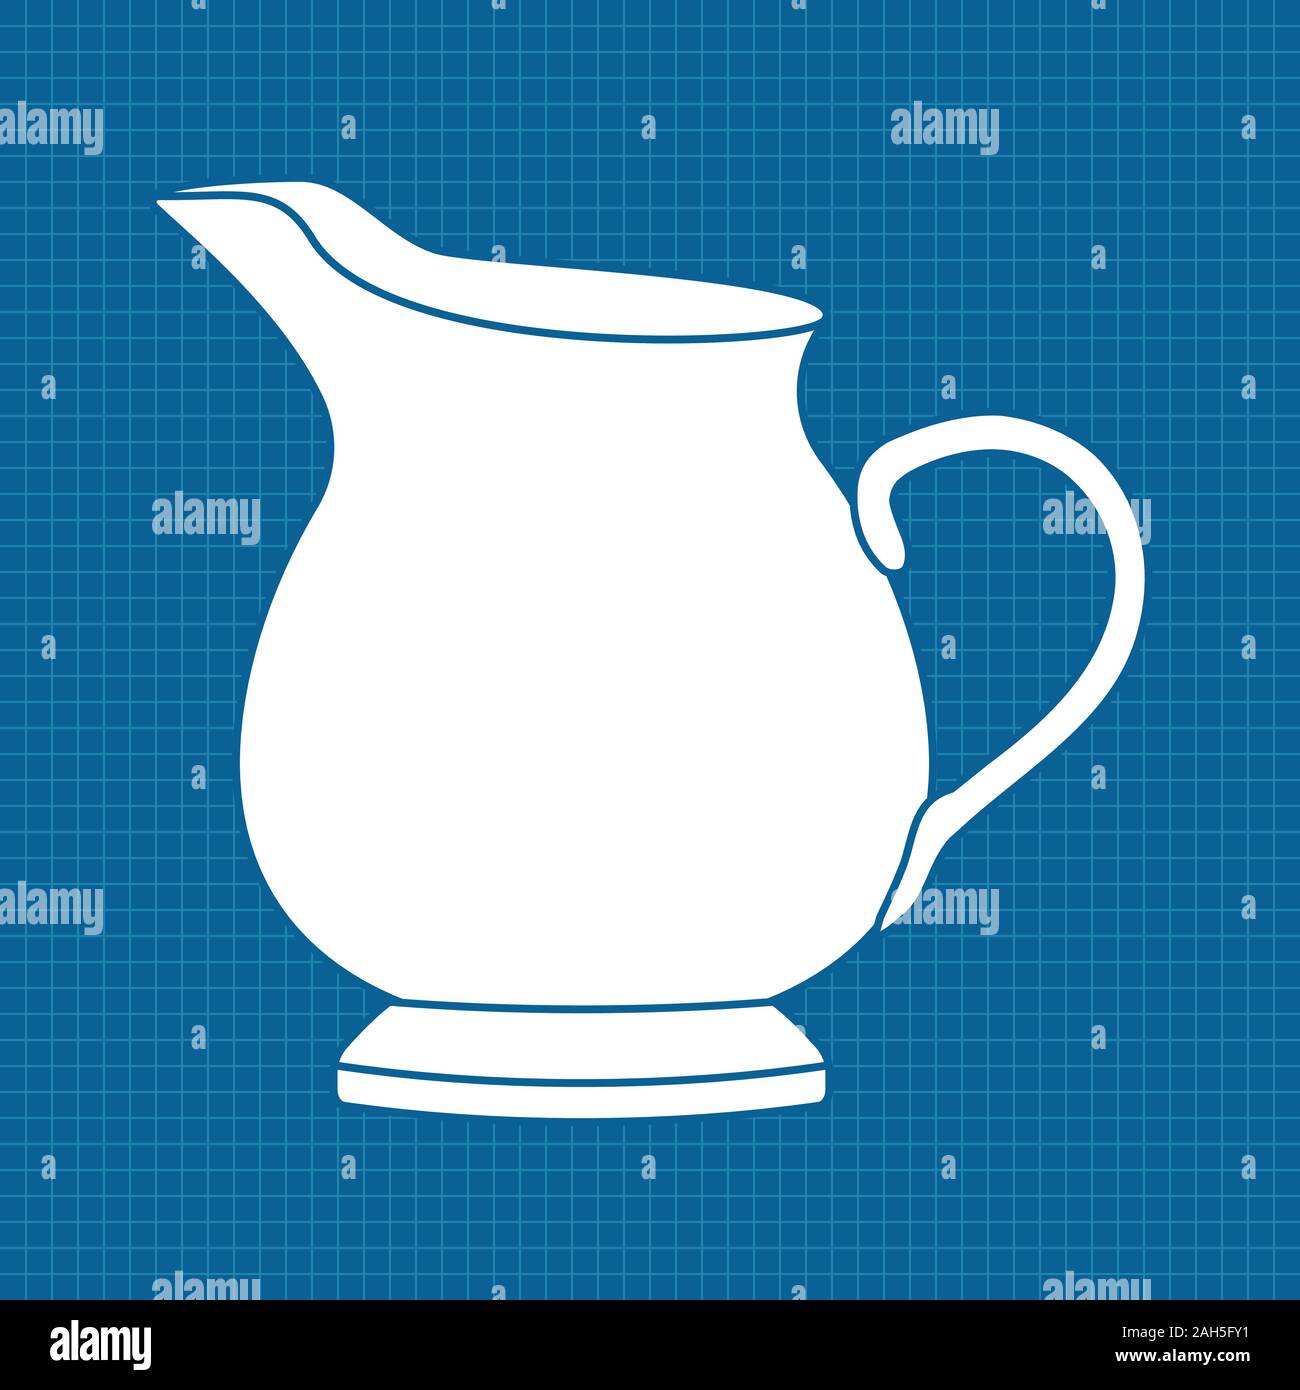 Milk jar. White outline icon on blueprint background. Vector illustration. Stock Vector